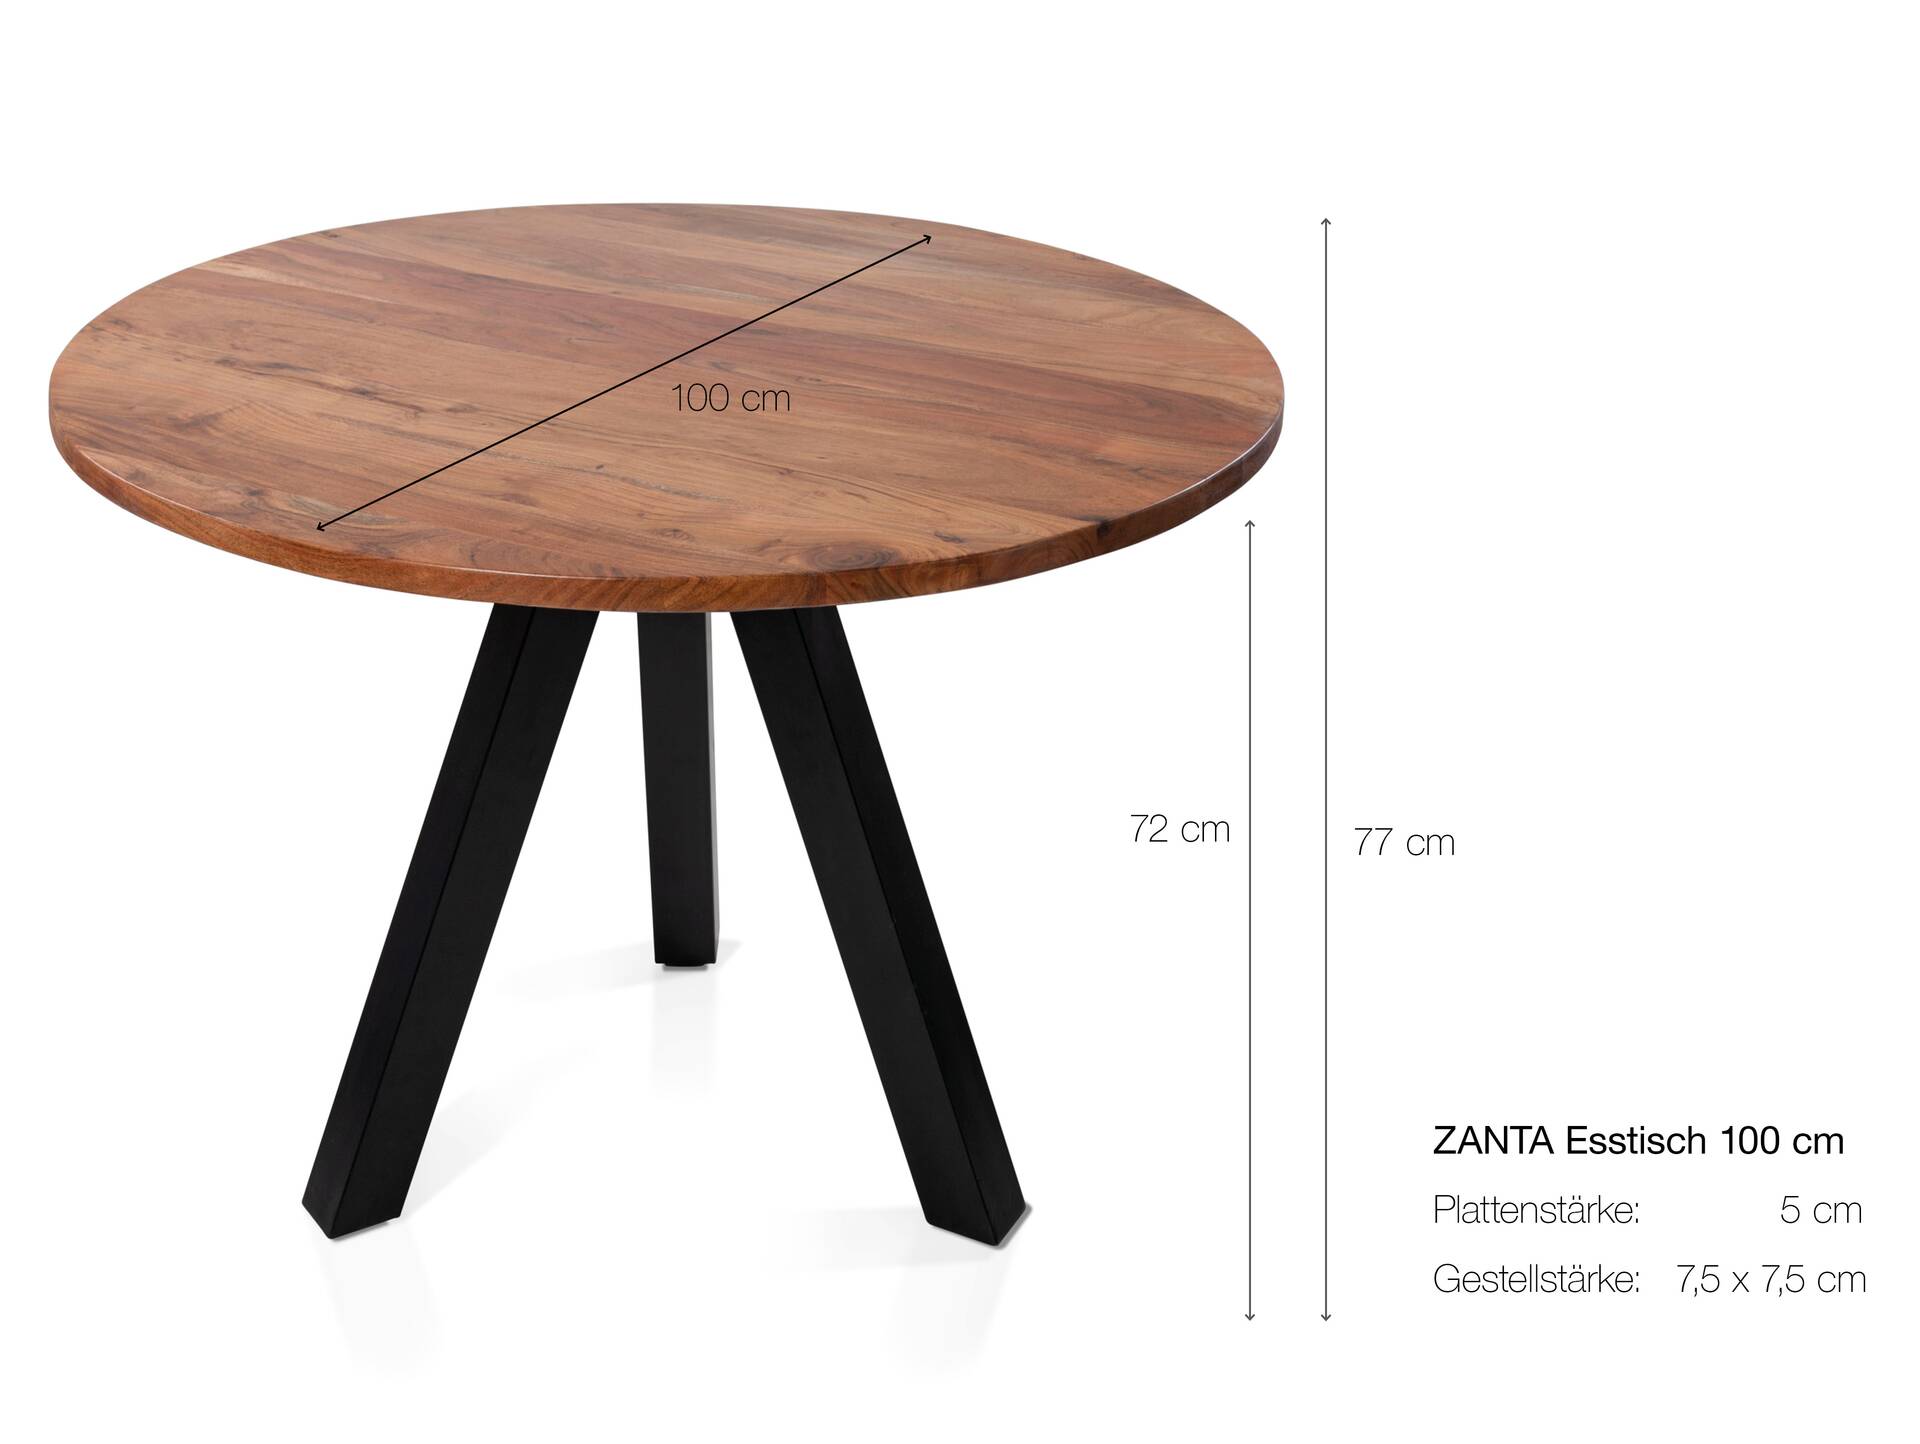 ZANTA Esstisch, Platte: 5 cm, Material Massivholz, Akazienholz 100 cm